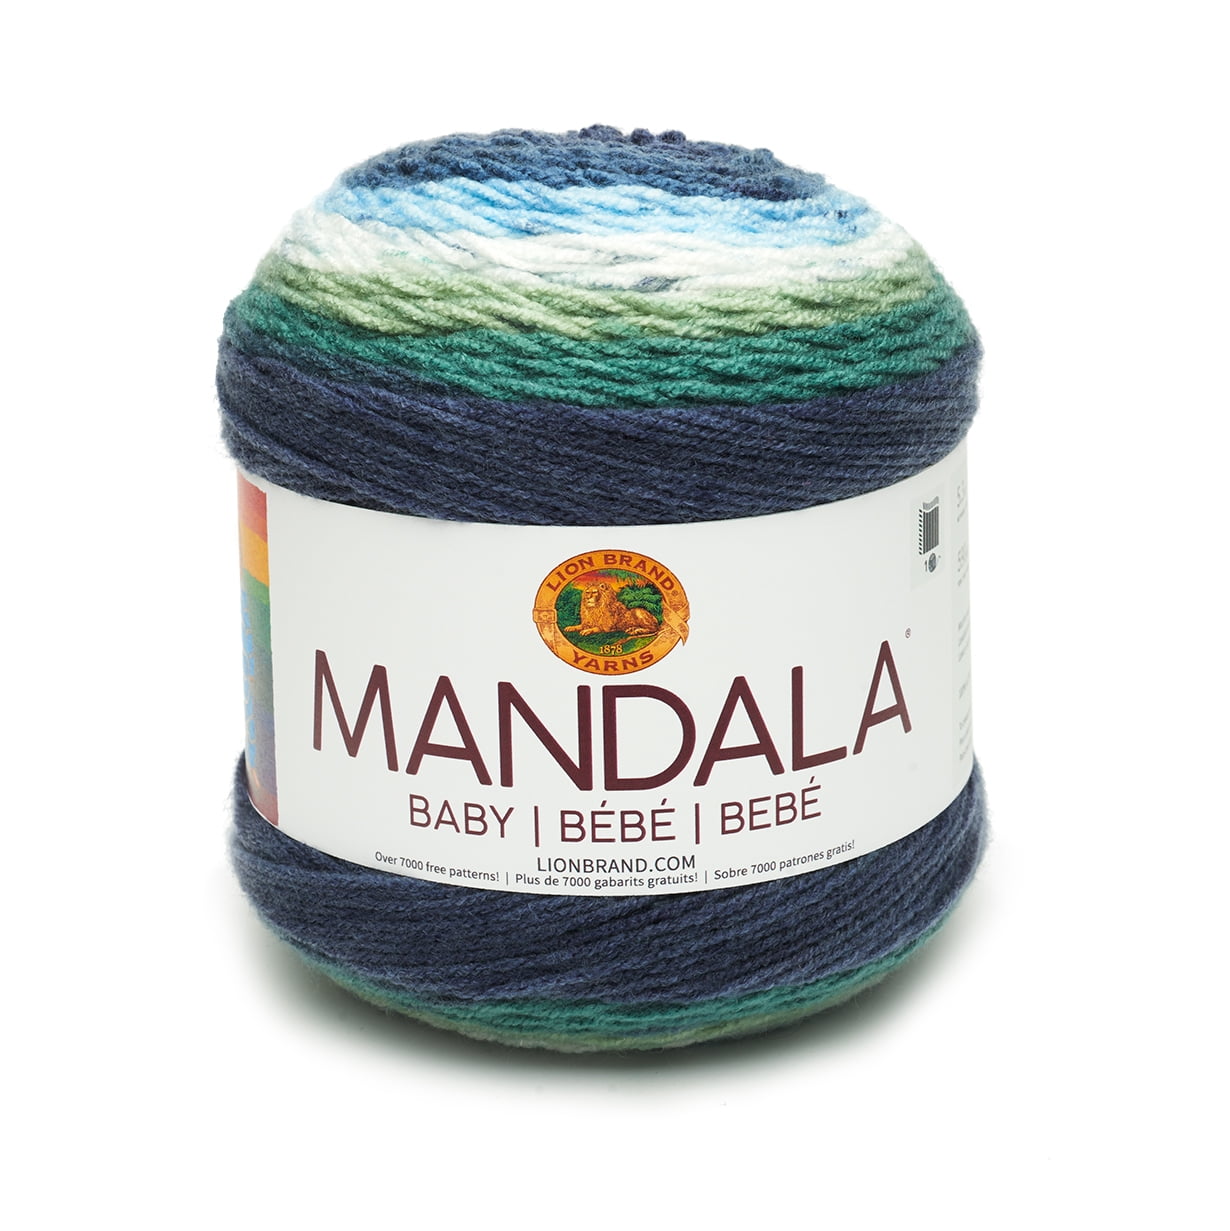 Lion Brand Mandala Baby Echo Caves Self-Striping Light Acrylic Multi-Color Yarn